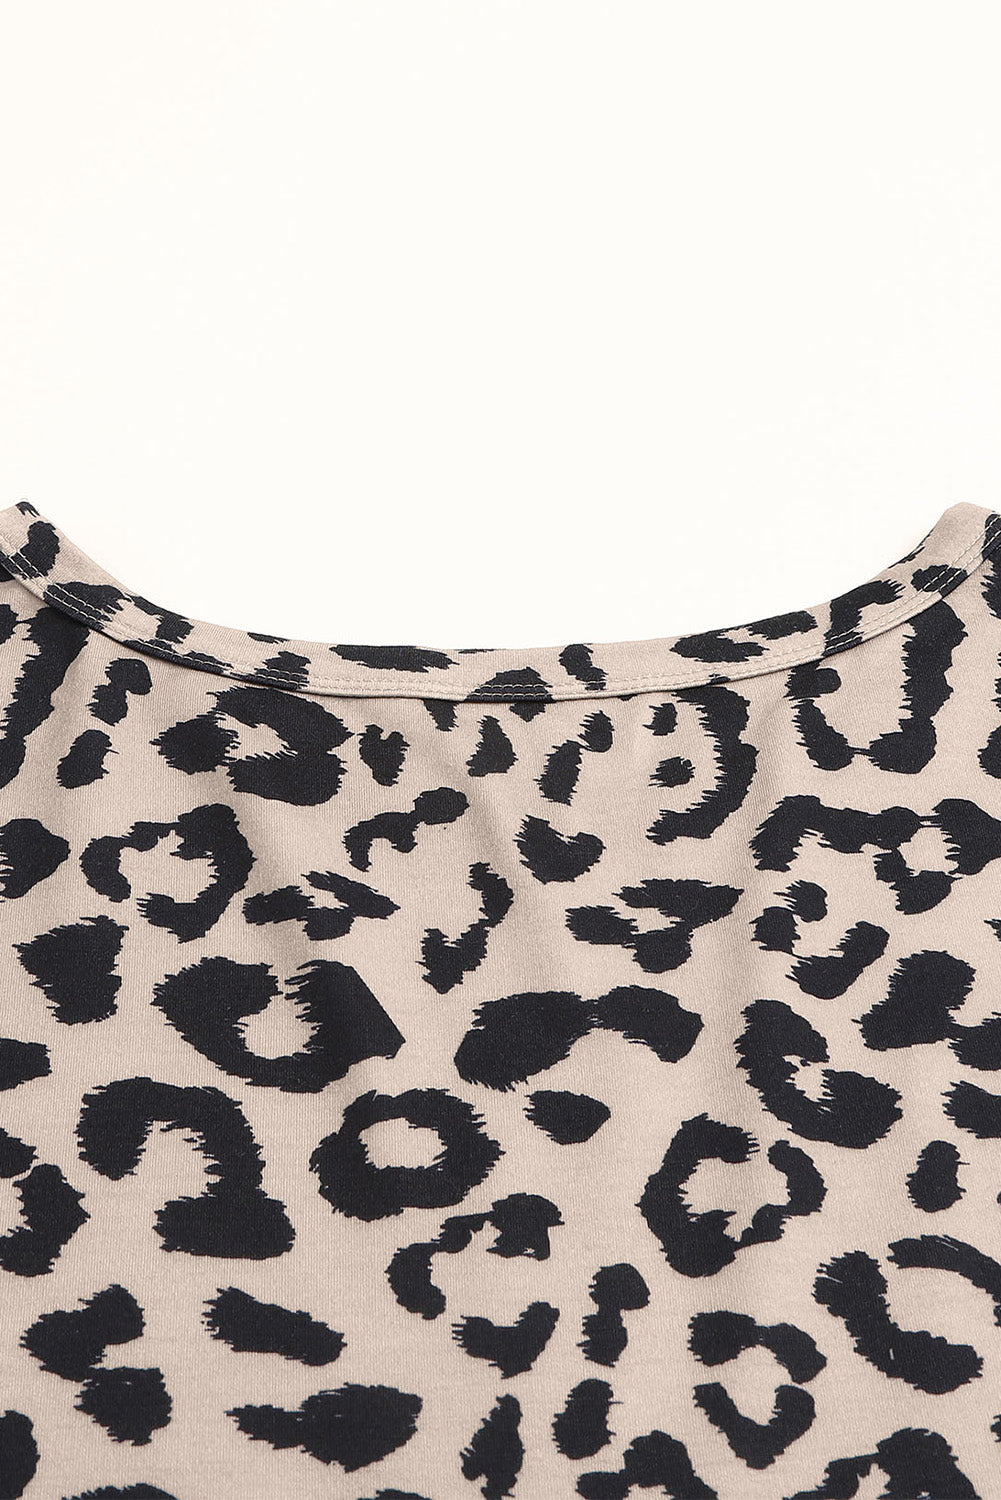 Cheetah Print Western Empire Waist Plus Size Midi Dress